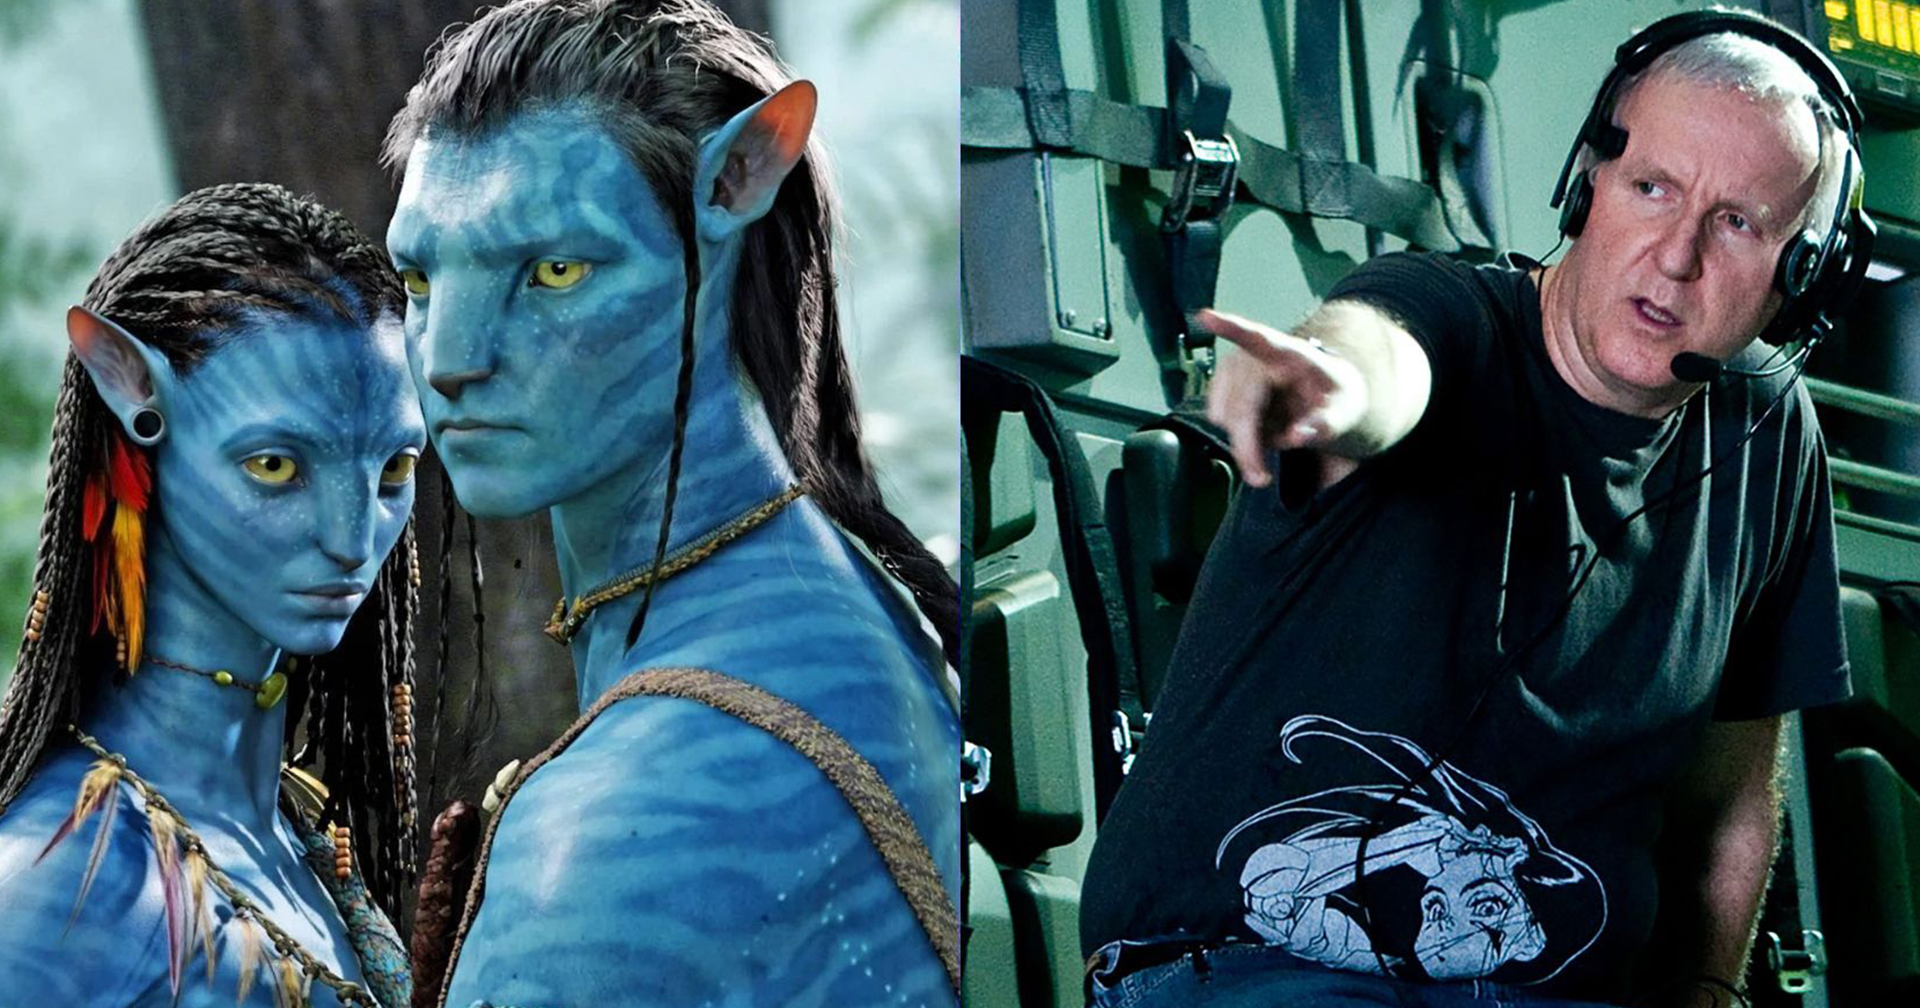 James Cameron อาจขอไม่กำกับ ‘Avatar’ ภาค 4-5